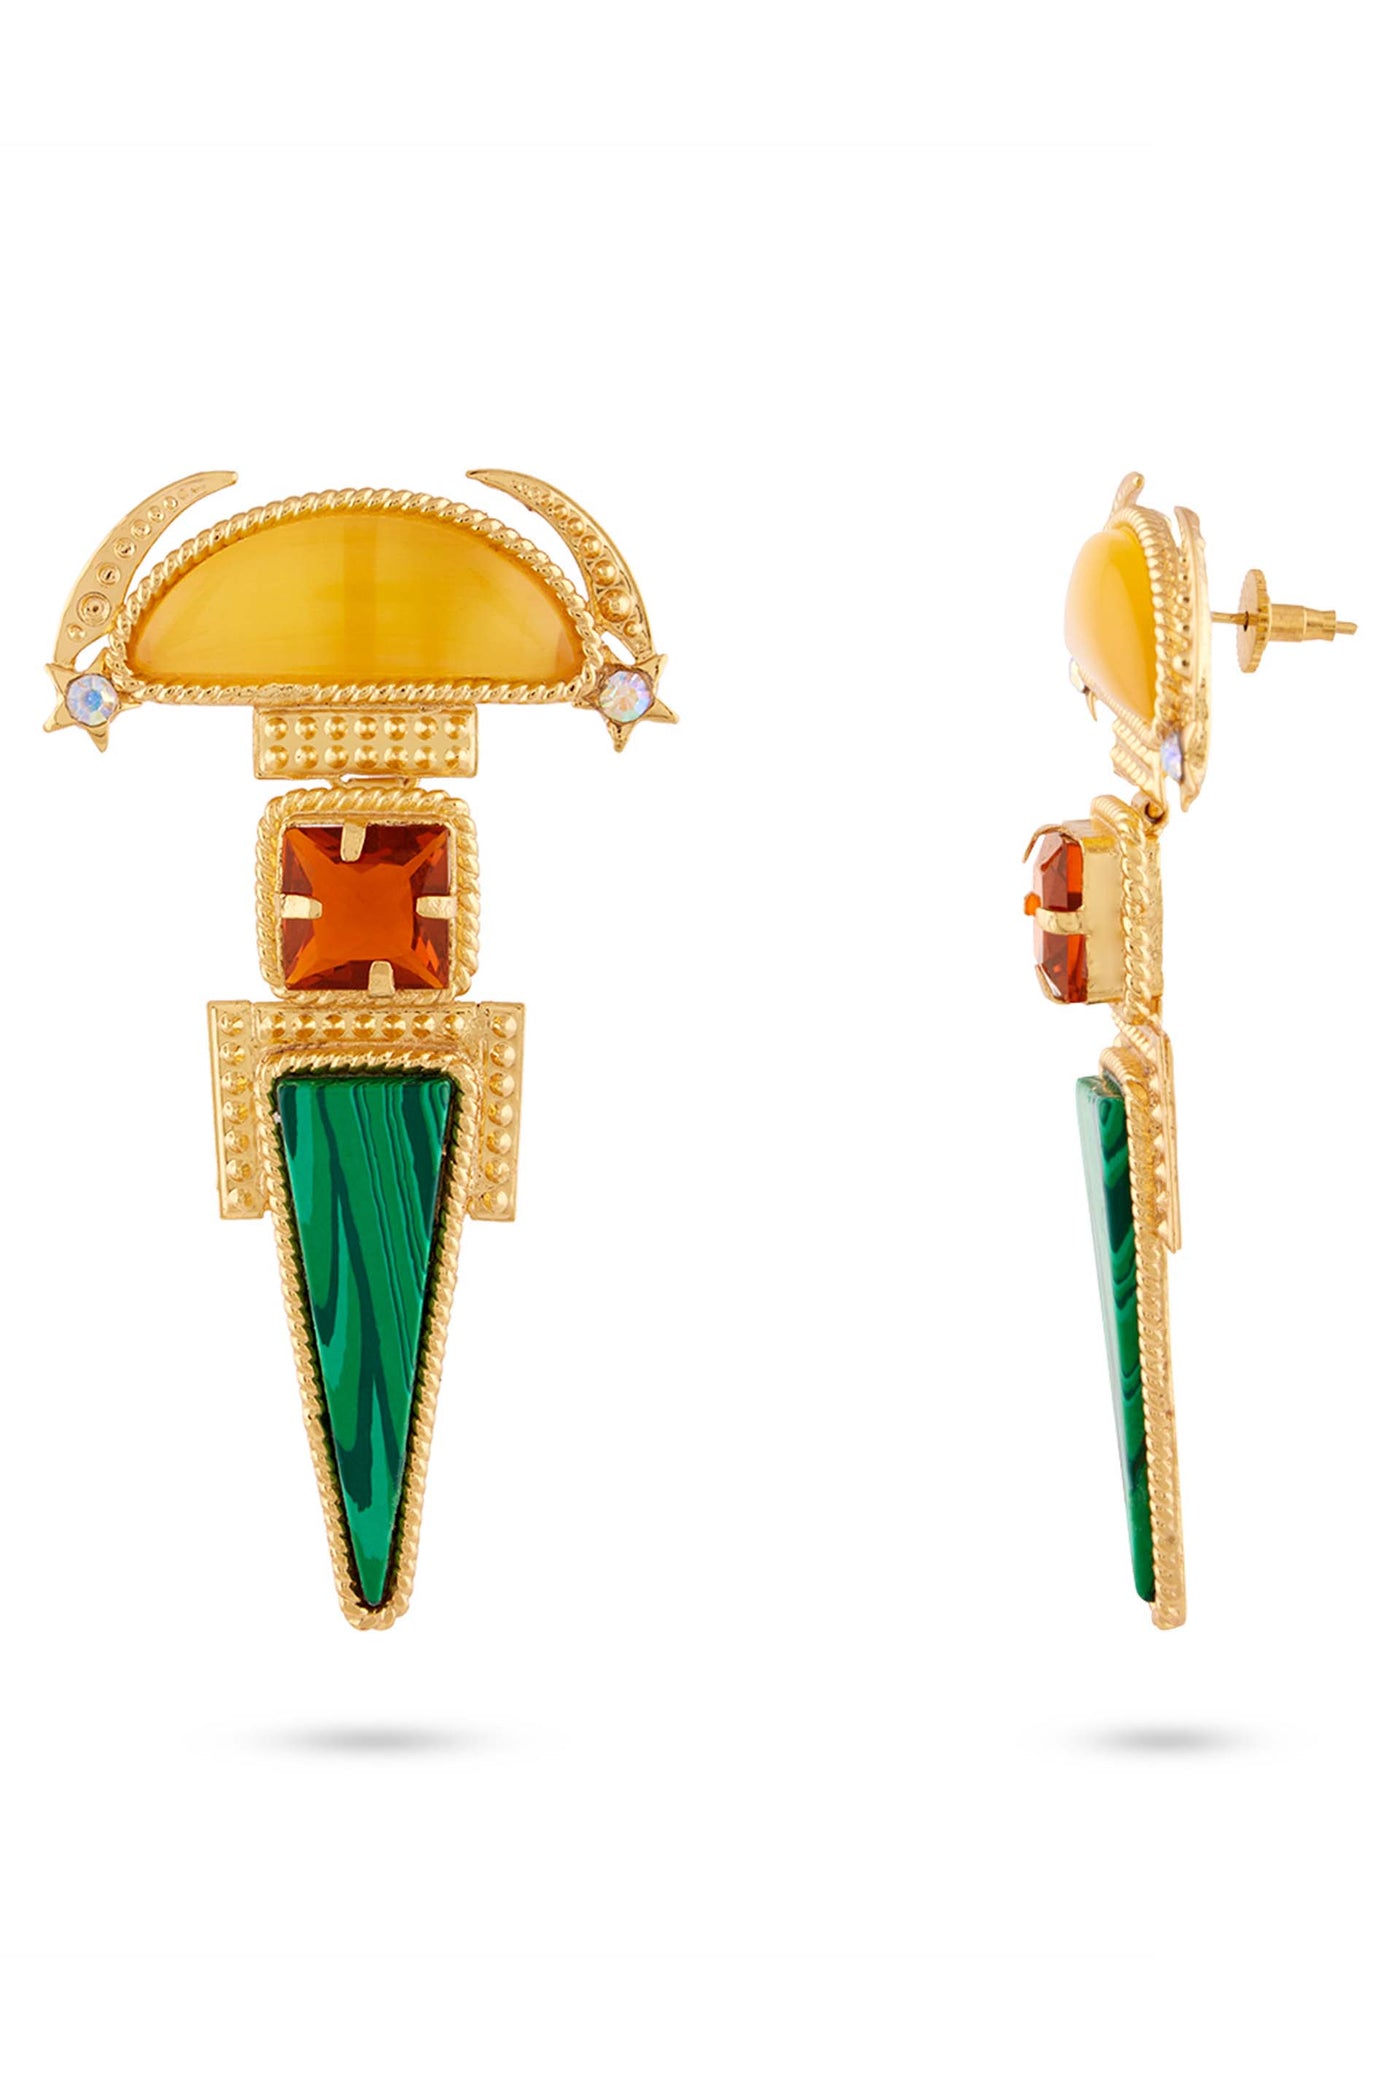 Valliyan Star Trek earrings gold fashion jewellery online shopping melange singapore Indian designer wear